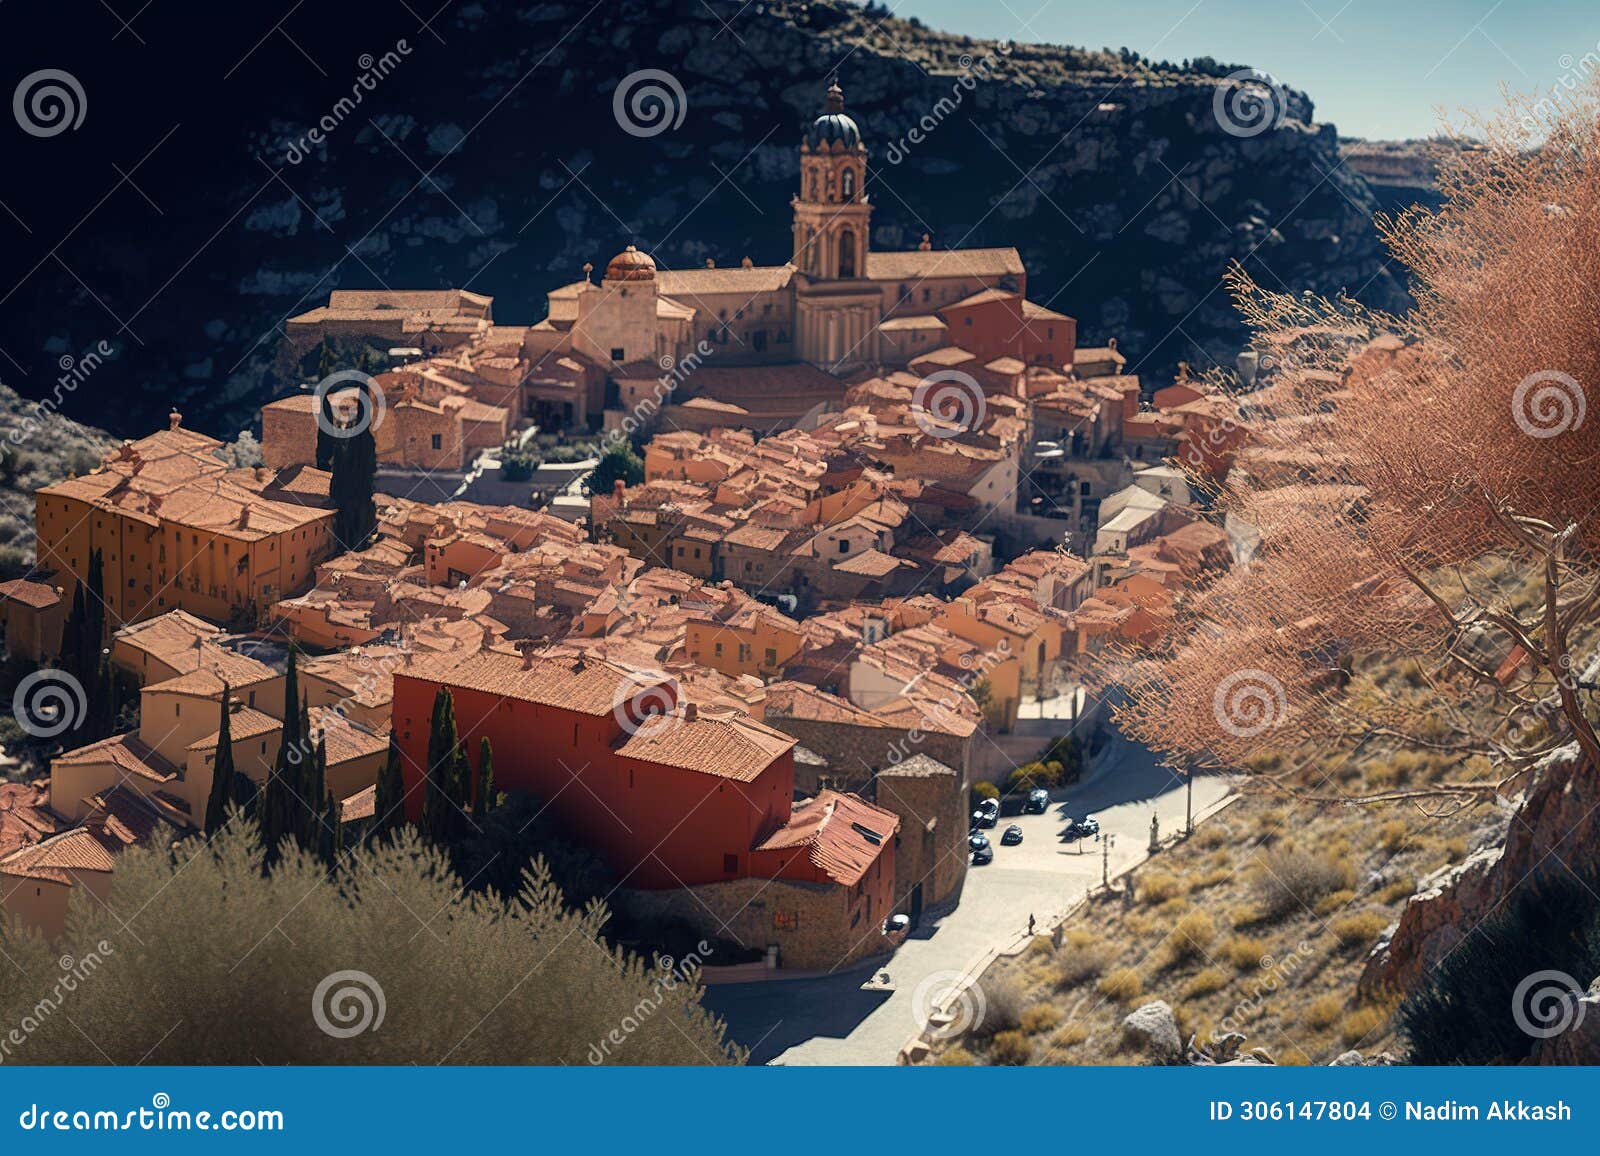 spain aragon, teruel, albarracin, town medieval view